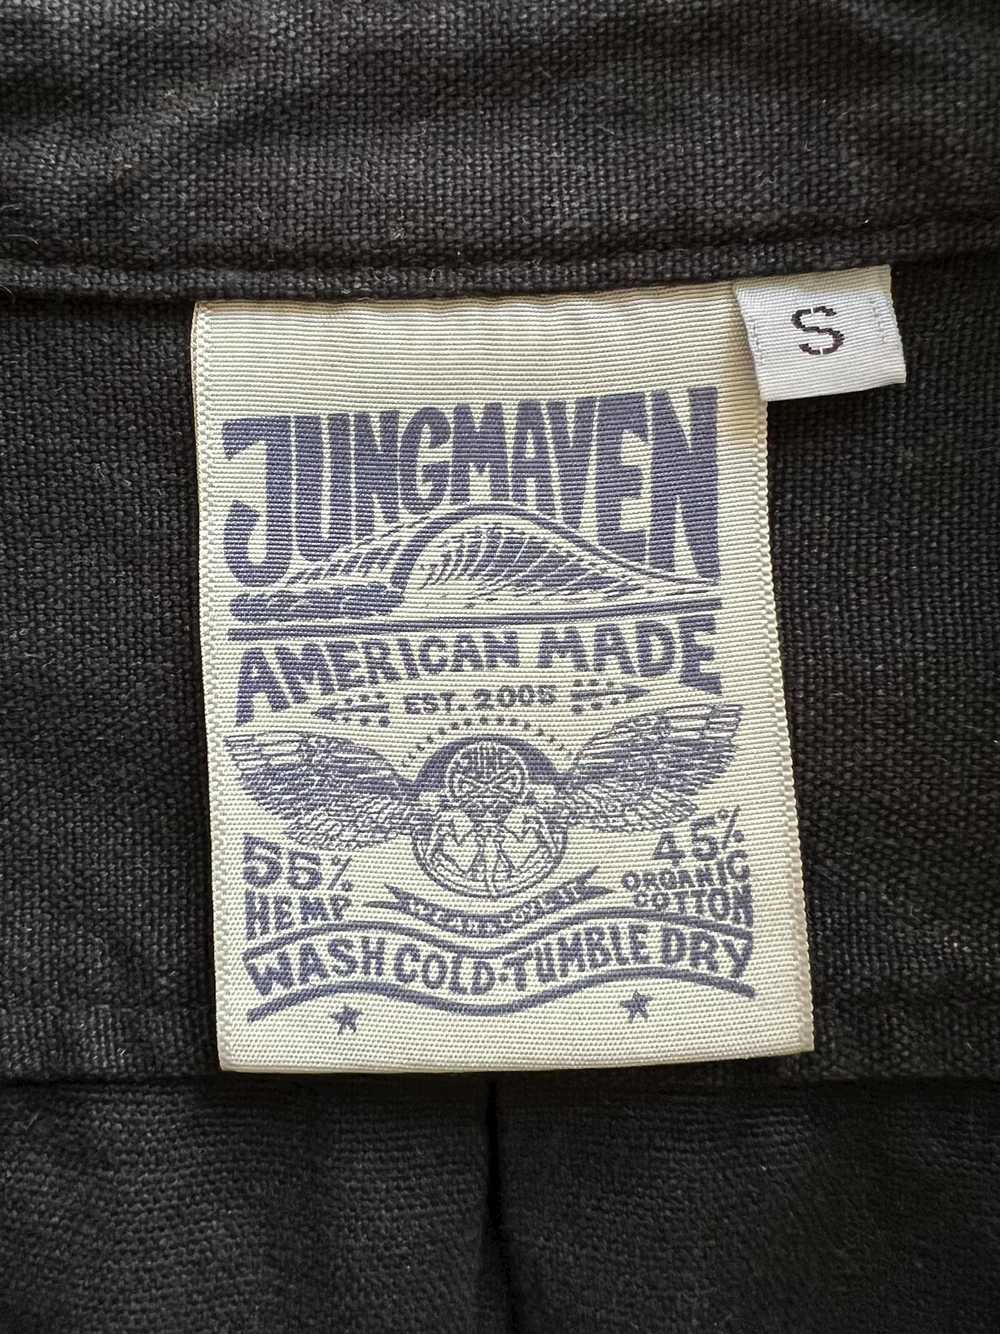 Jungmaven Jungmaven Topanga Shirt in Black Size S - image 3